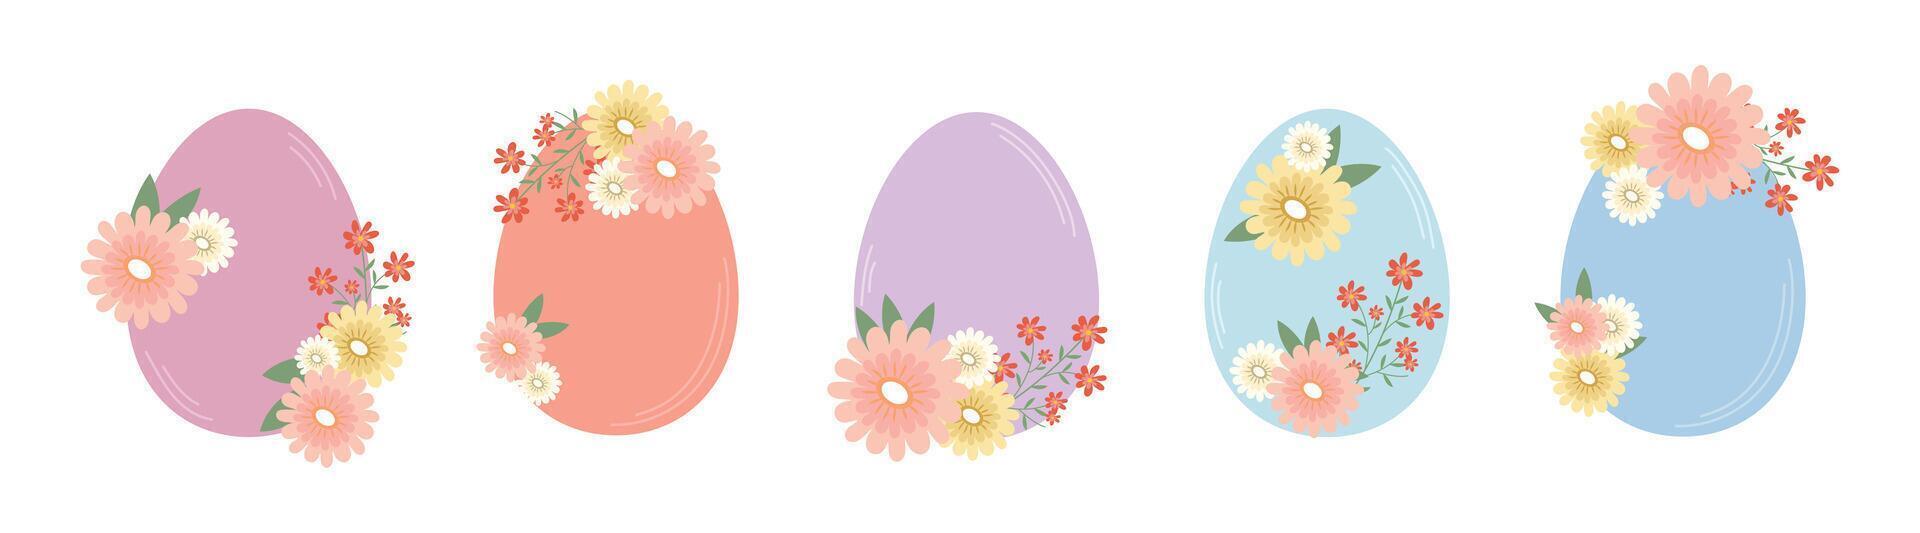 conjunto do Páscoa ovos decorado com flores Páscoa ovos dentro pastel cores. vetor